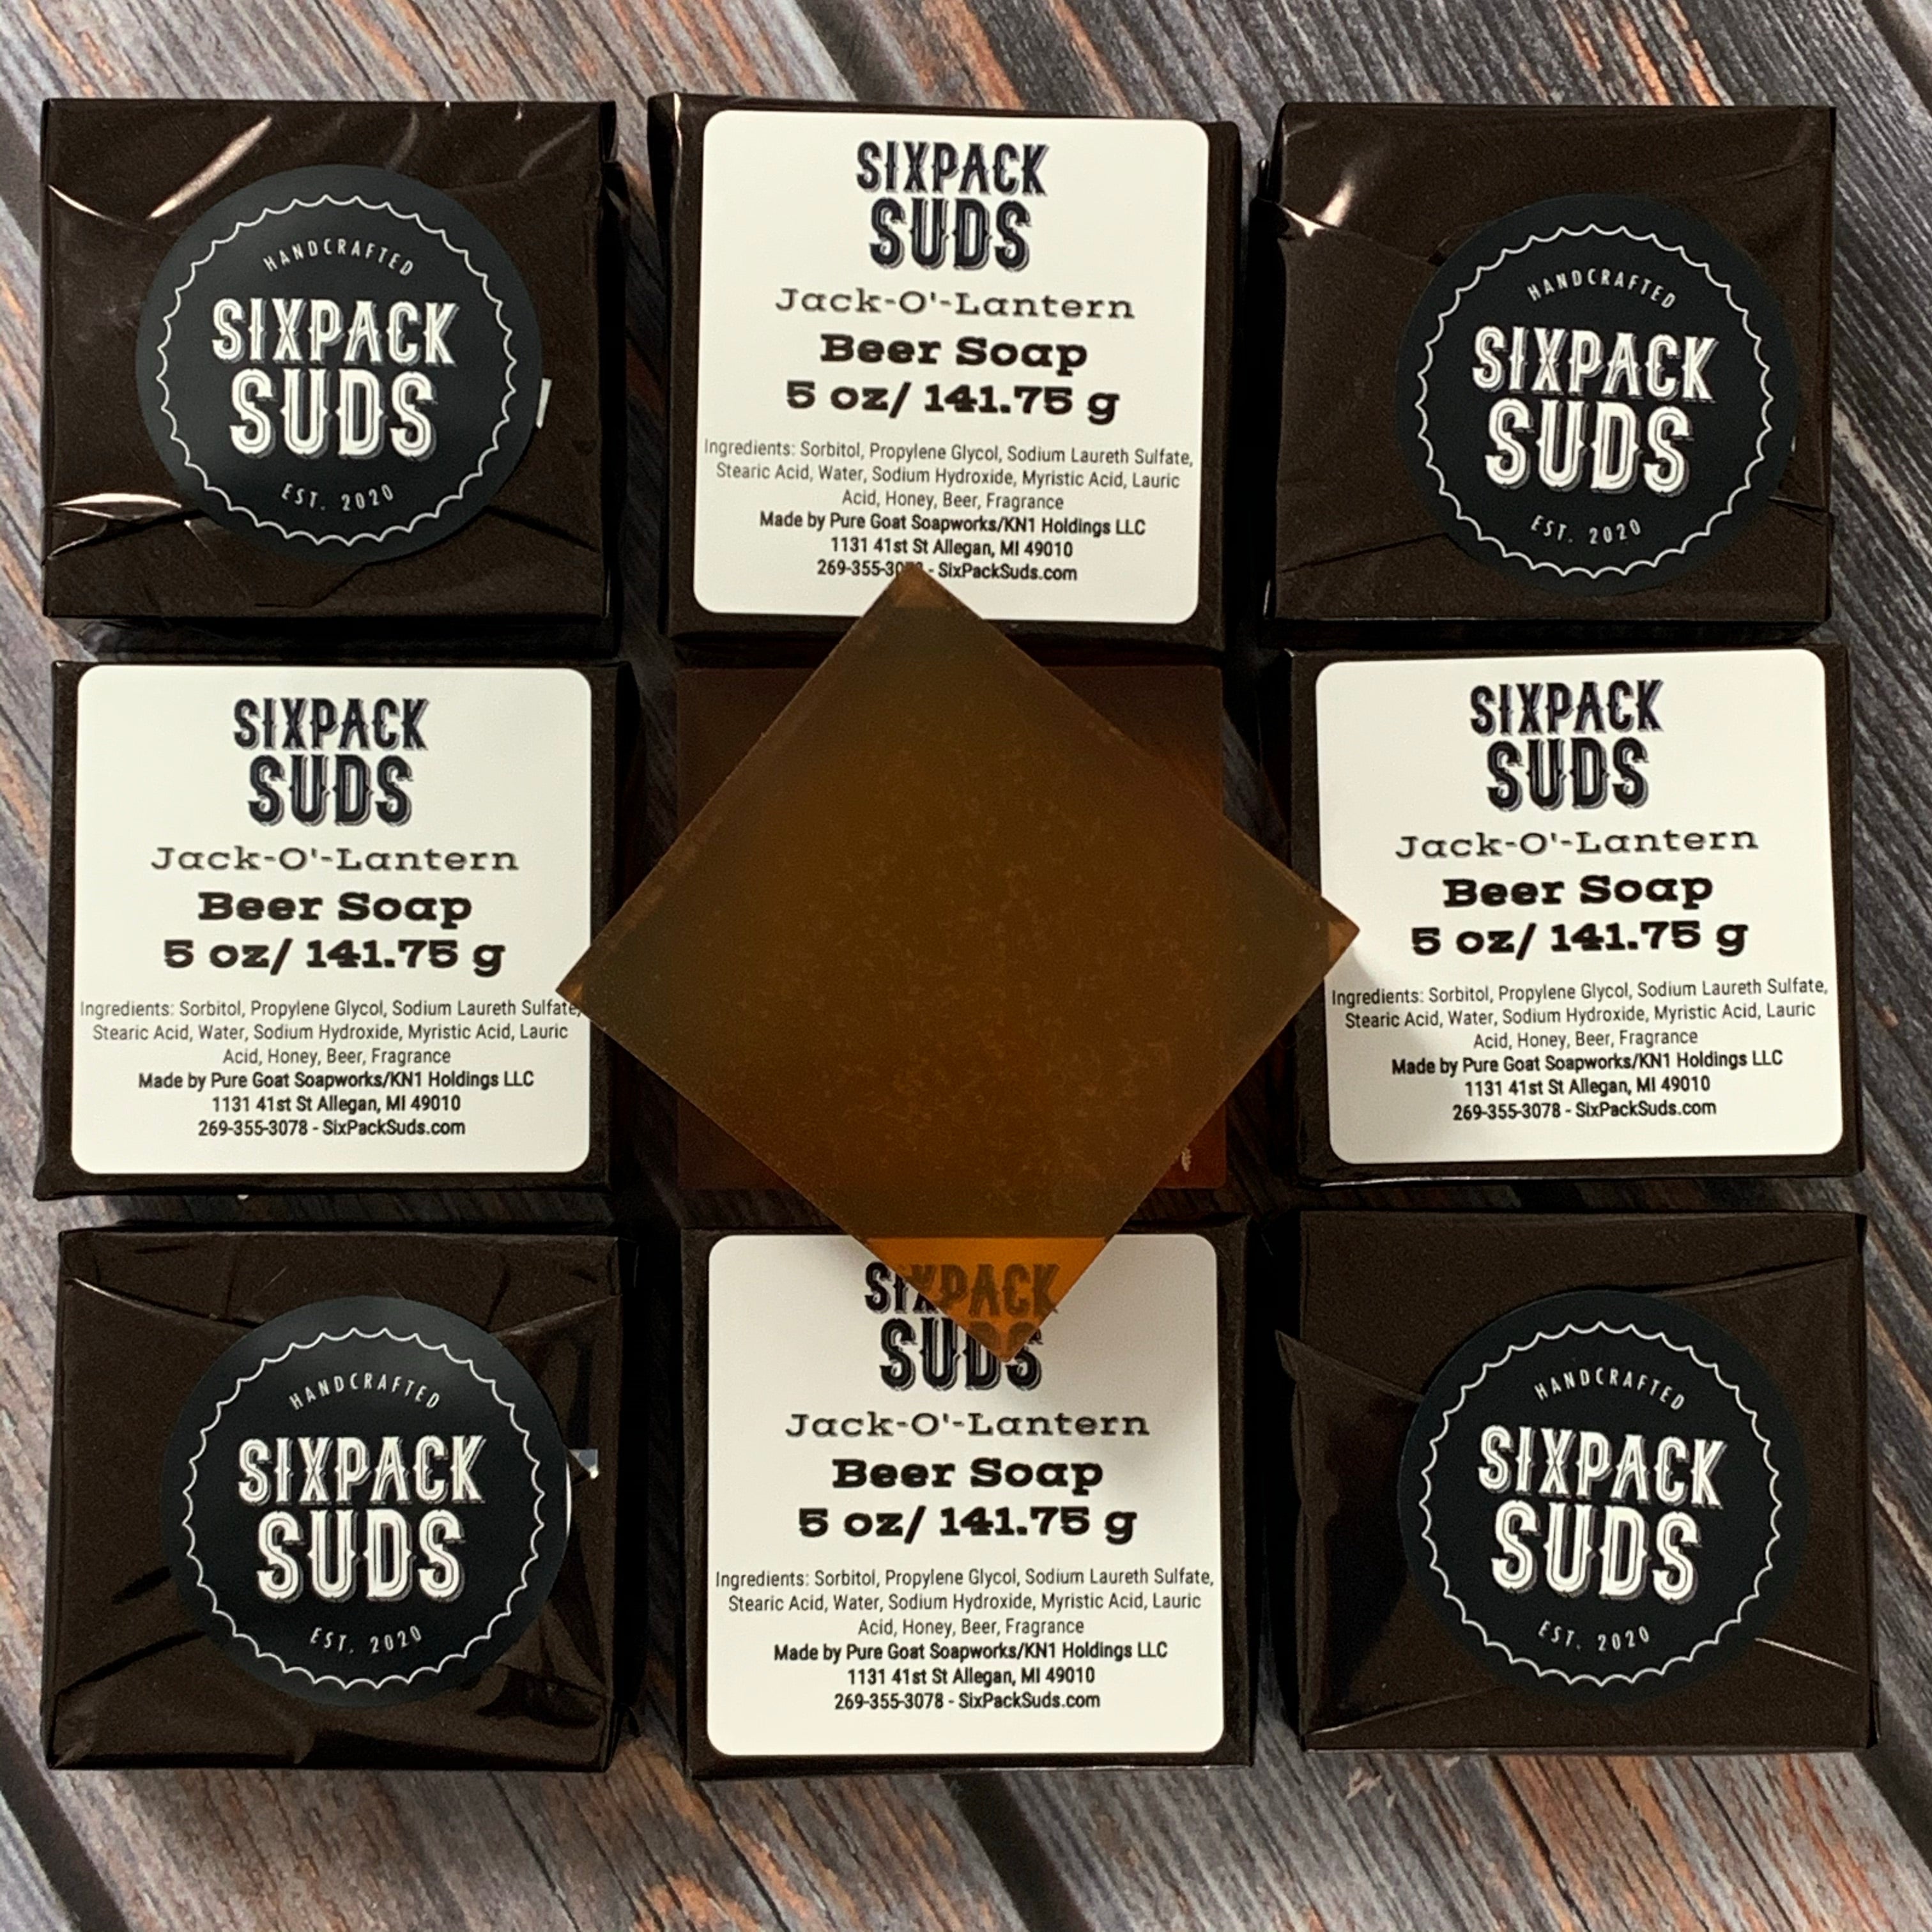 SIXPACK SUDS Jack-O'-Lantern Beer Soap